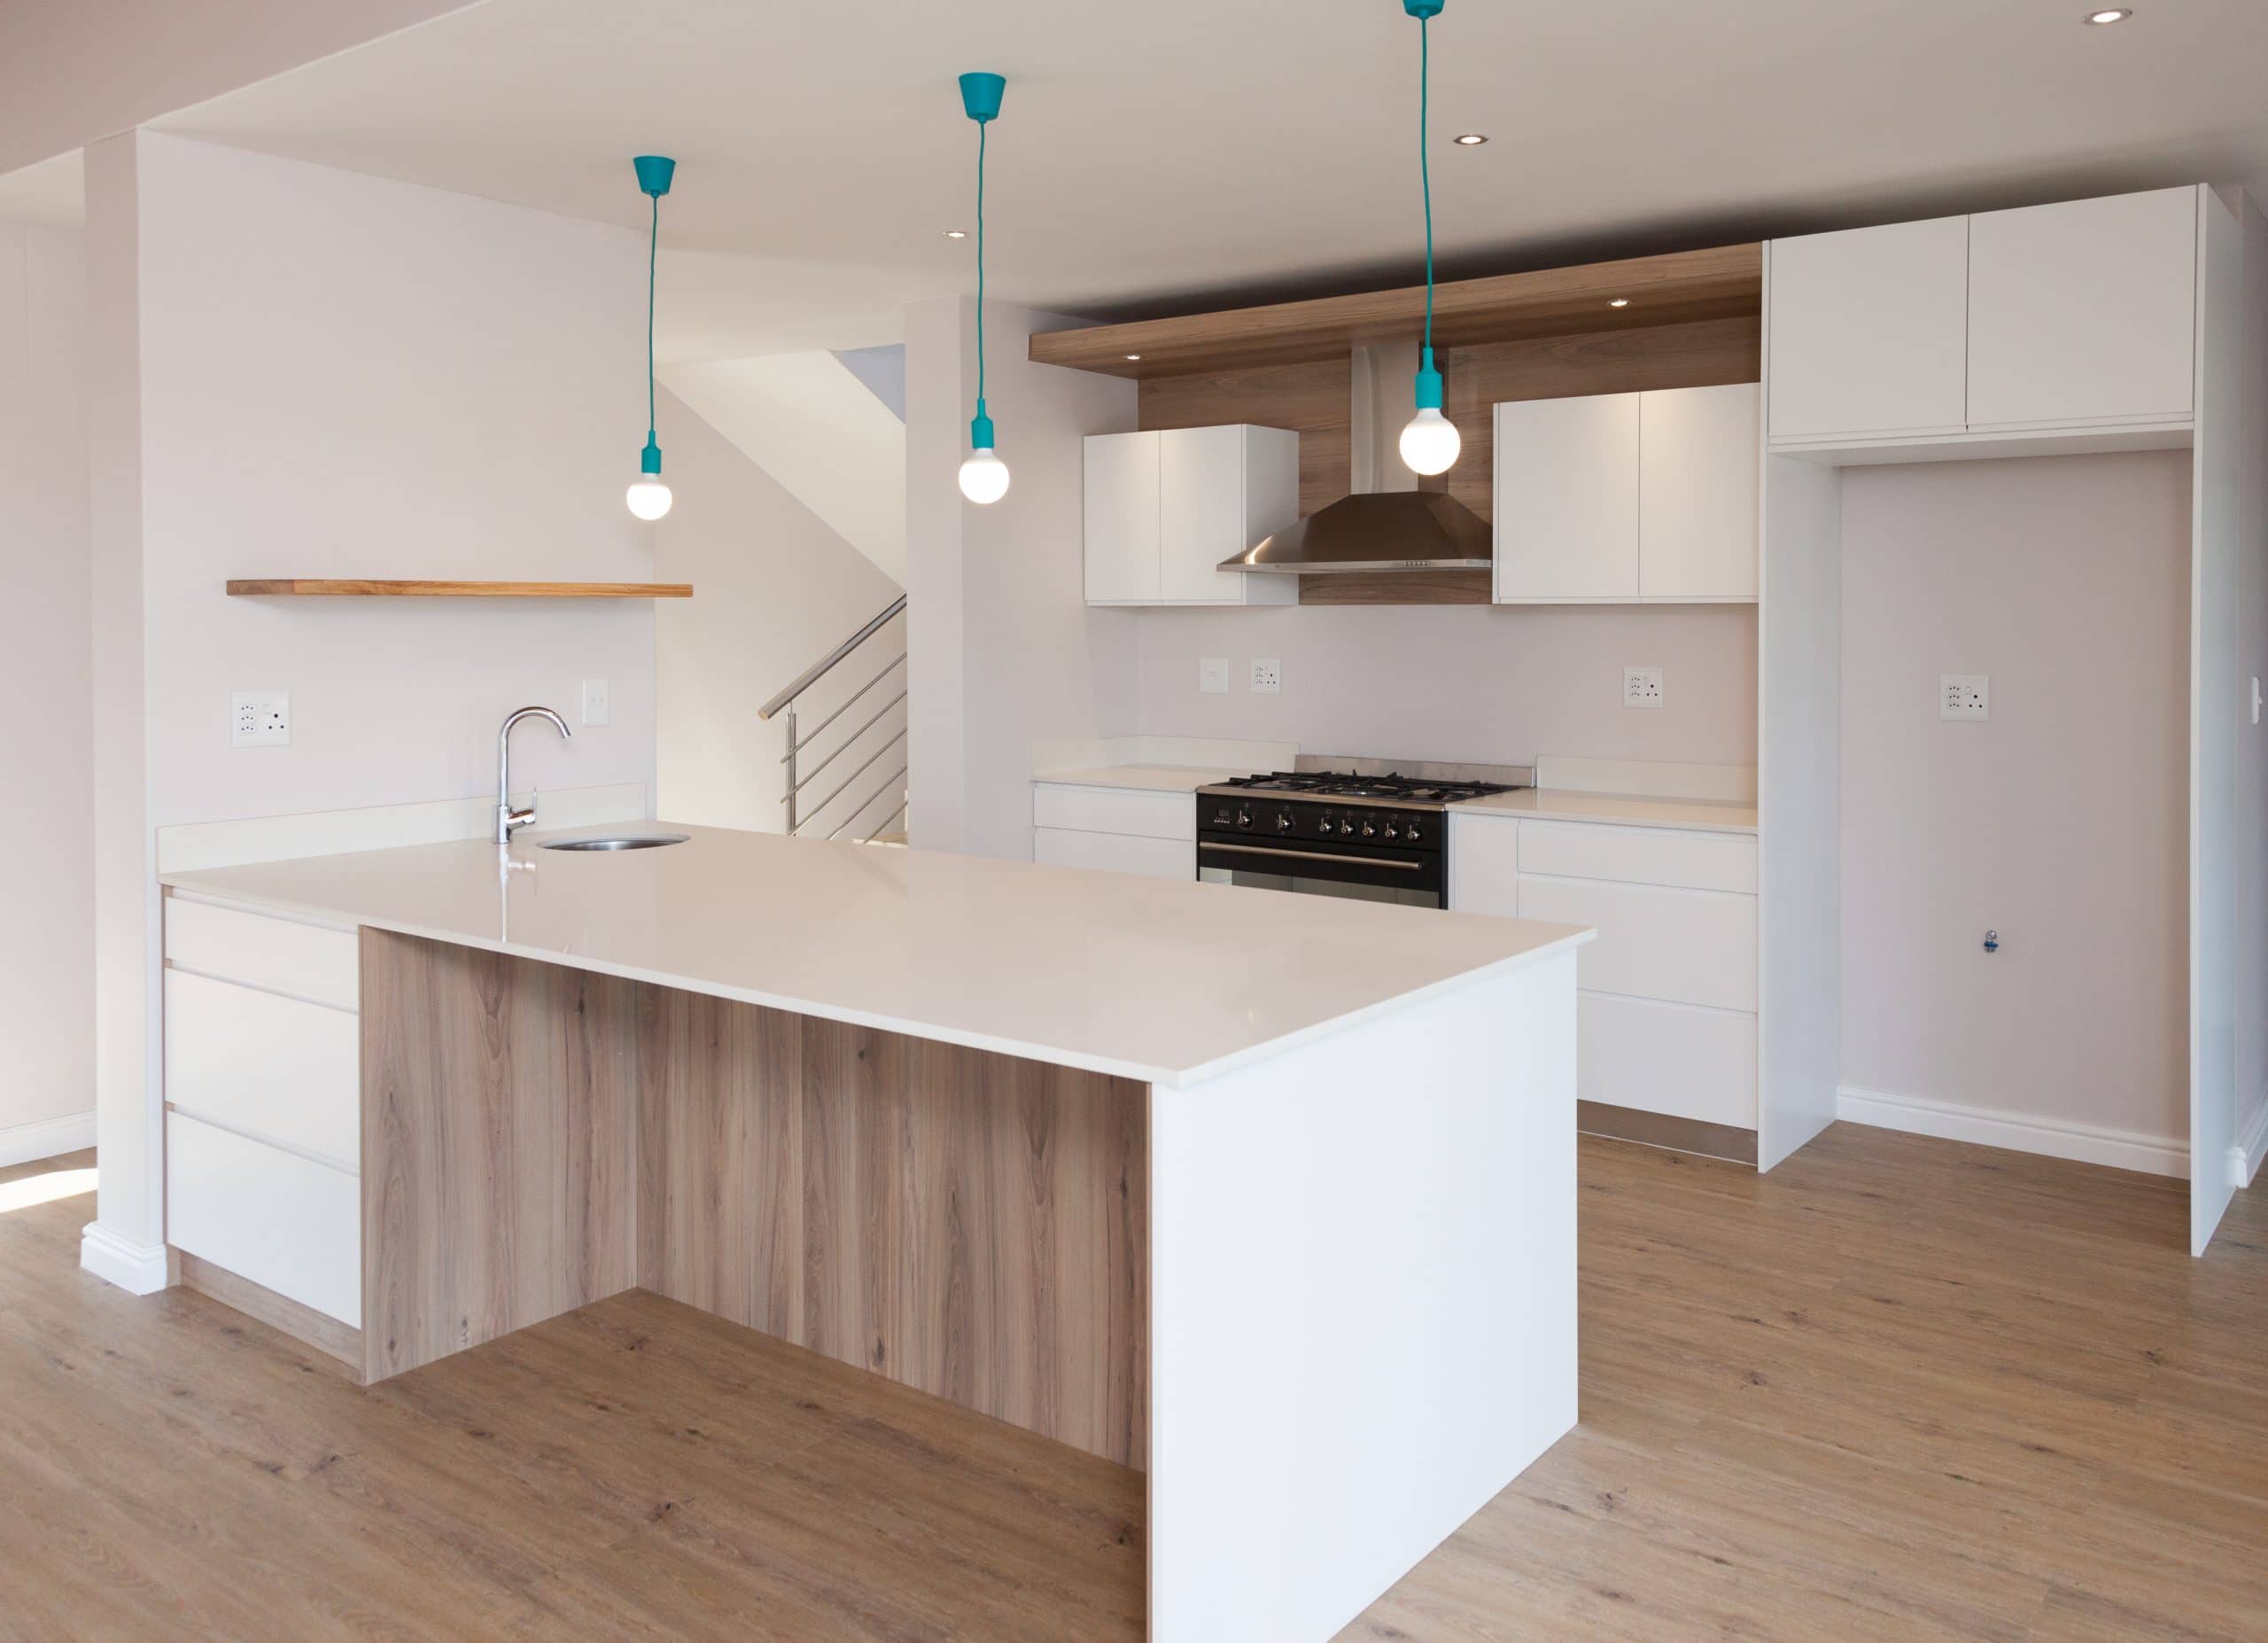 white and ebony wood kitchen with blue pendants and smeg appliances